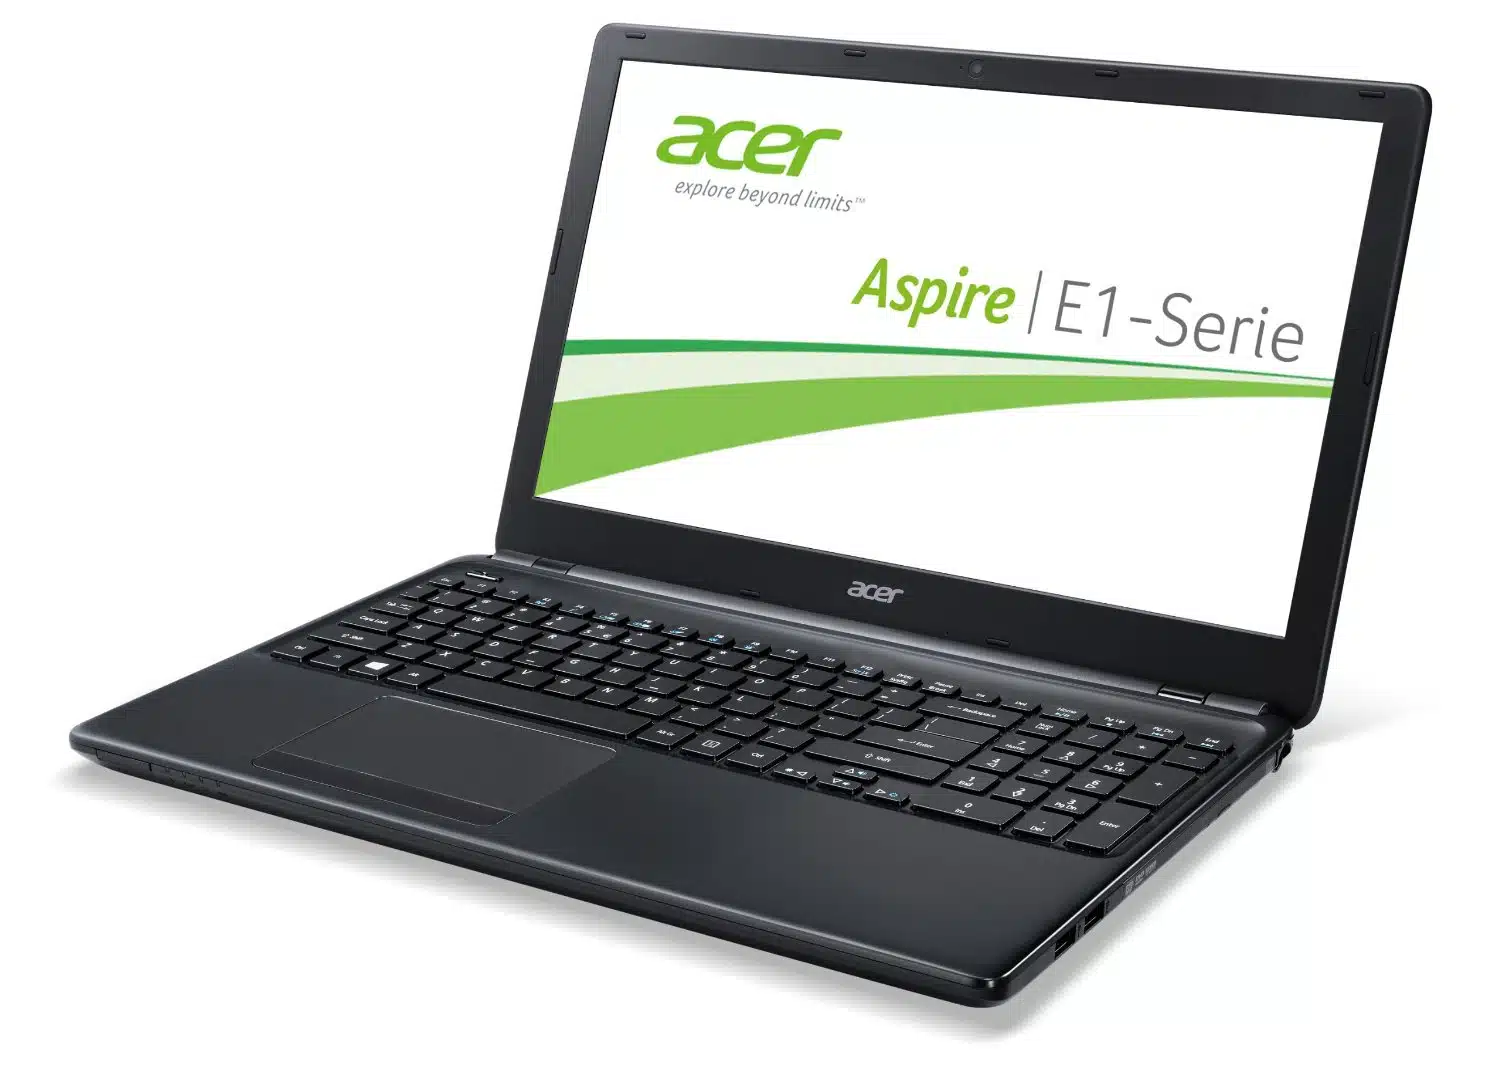 Acer Wifi Driver for Windows 32-bit/64-bit